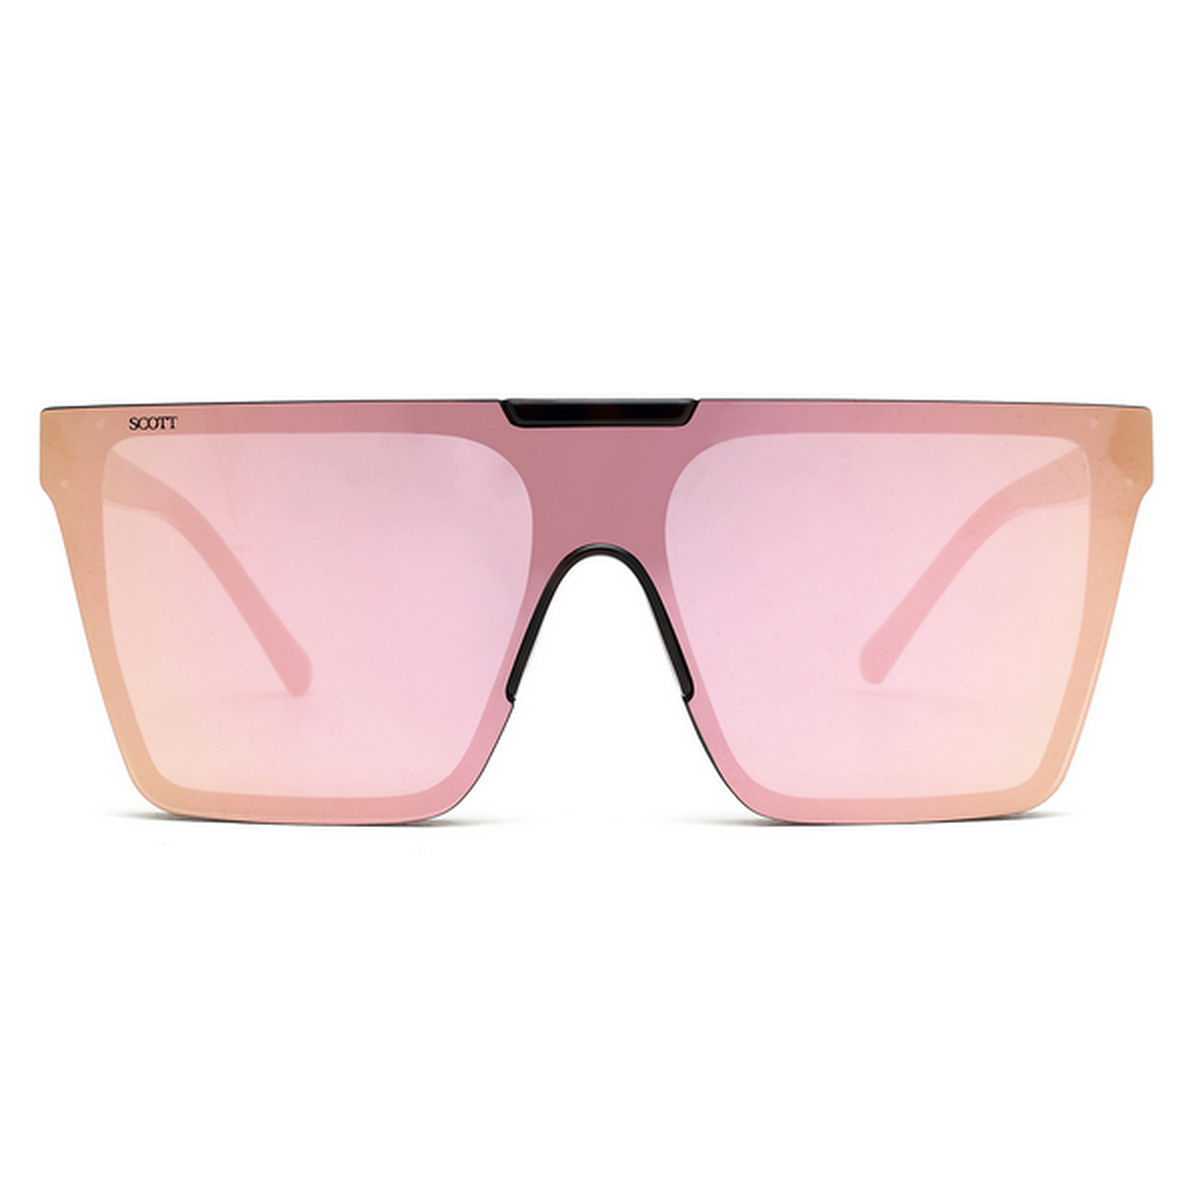 Highlight more than 163 scott sunglasses latest